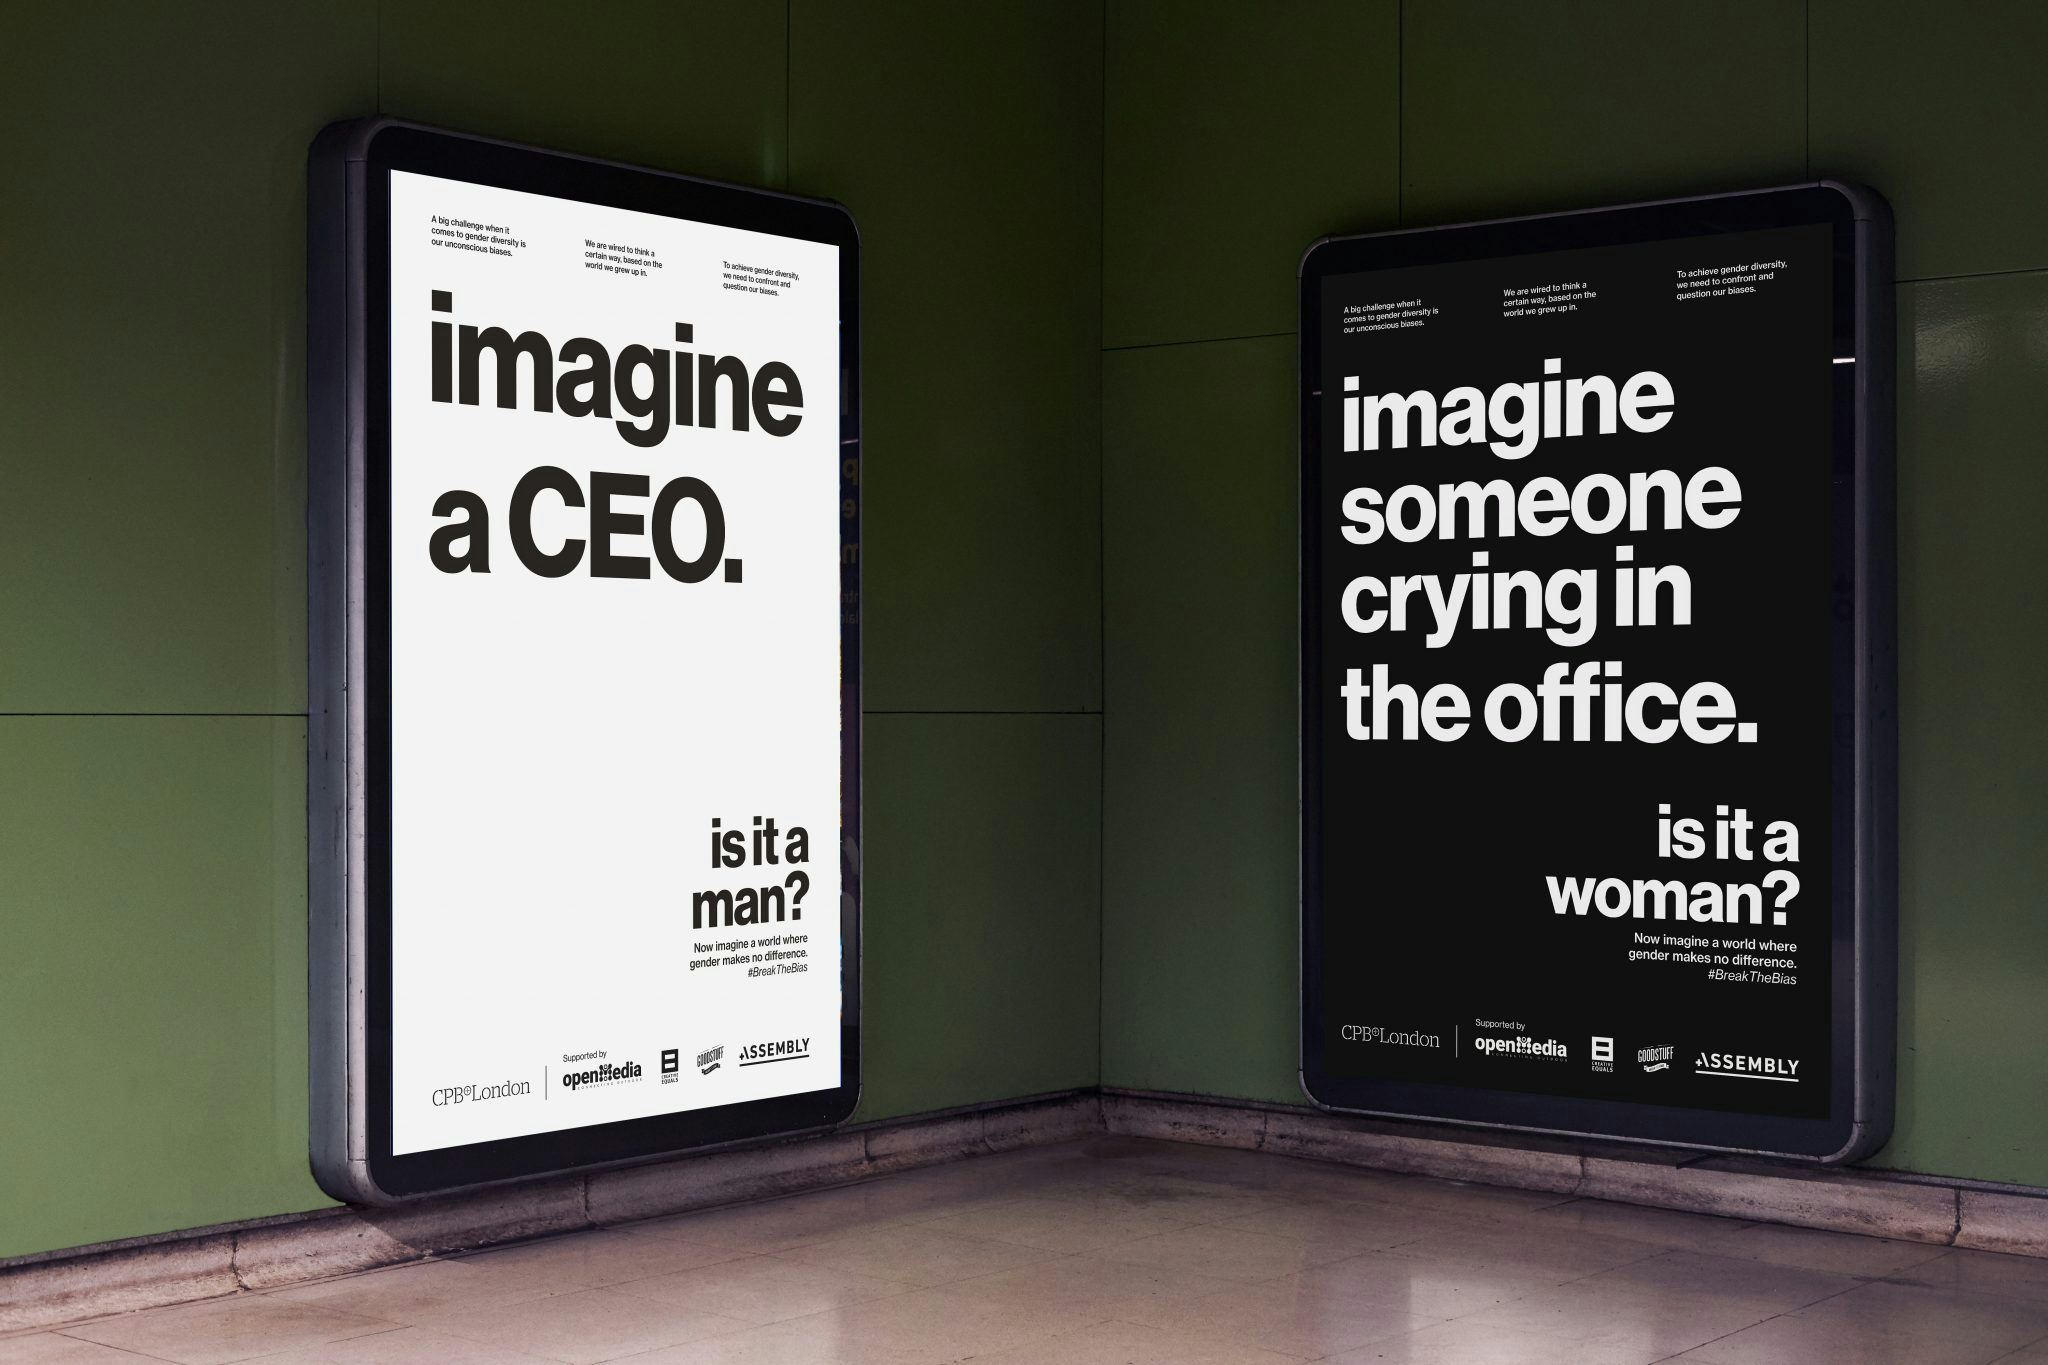 New ad tackles everyday gender bias